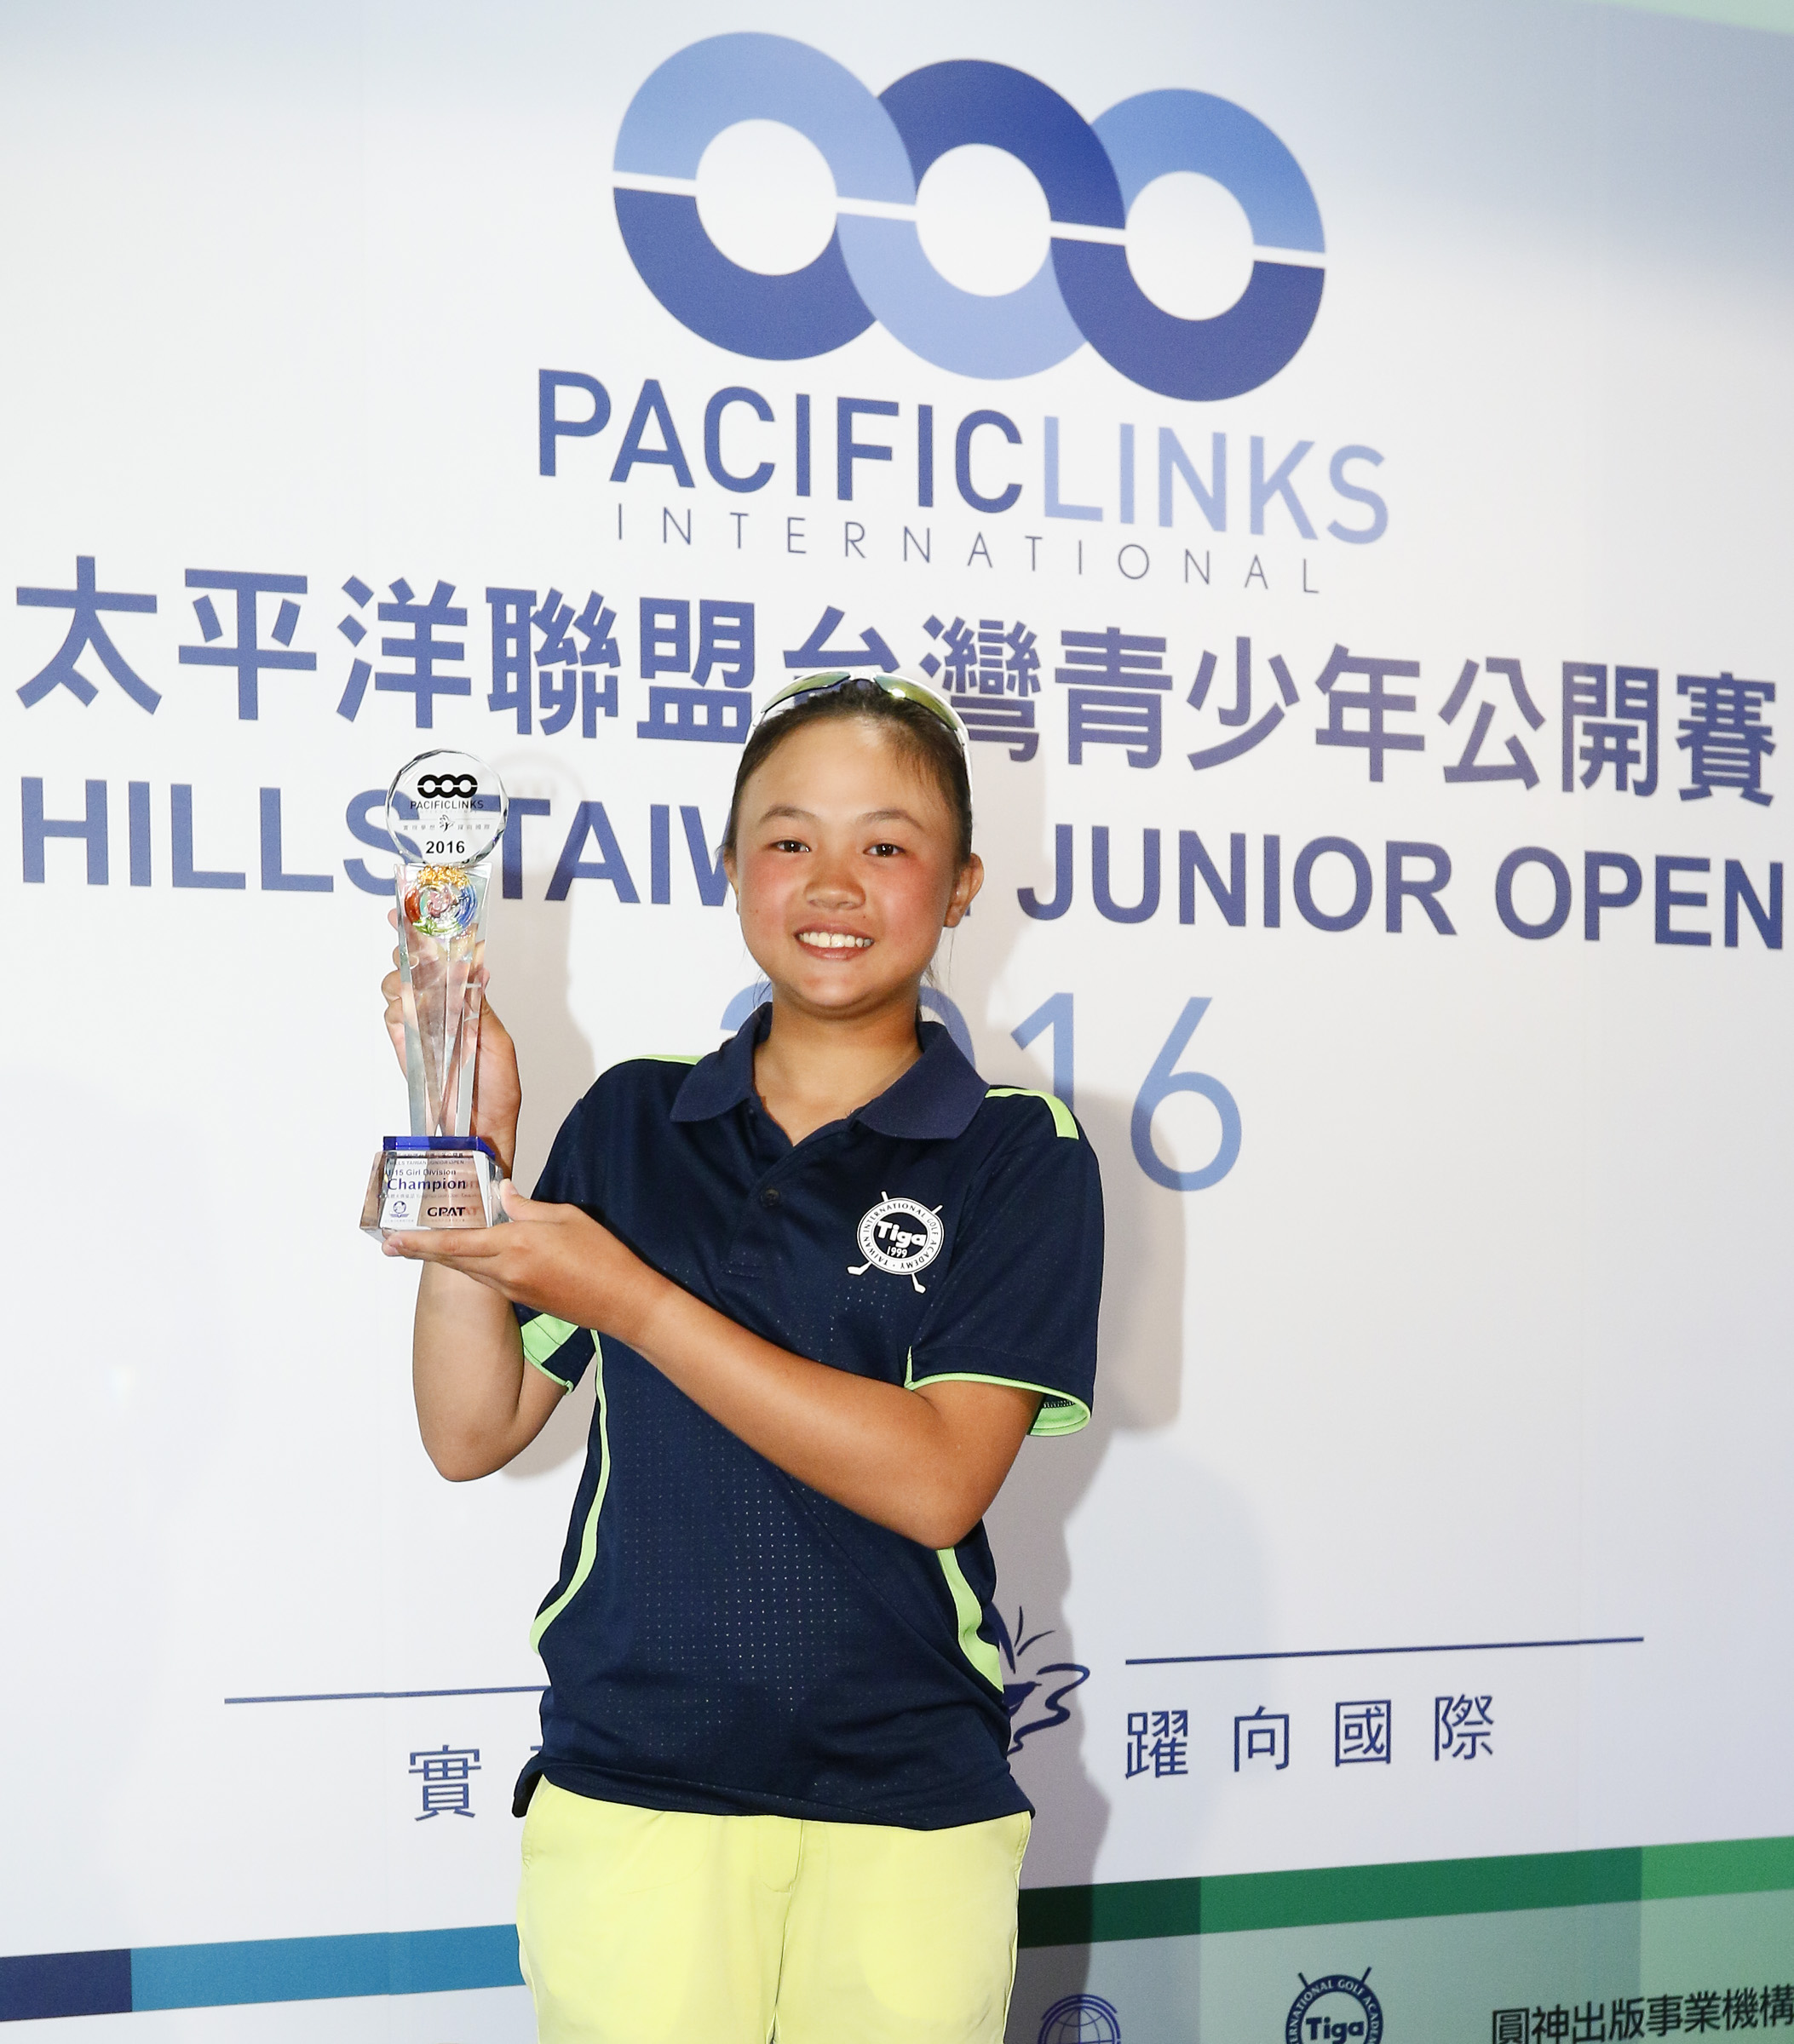 Jamie Hsieh won the 2016 Taiwan Junior Open